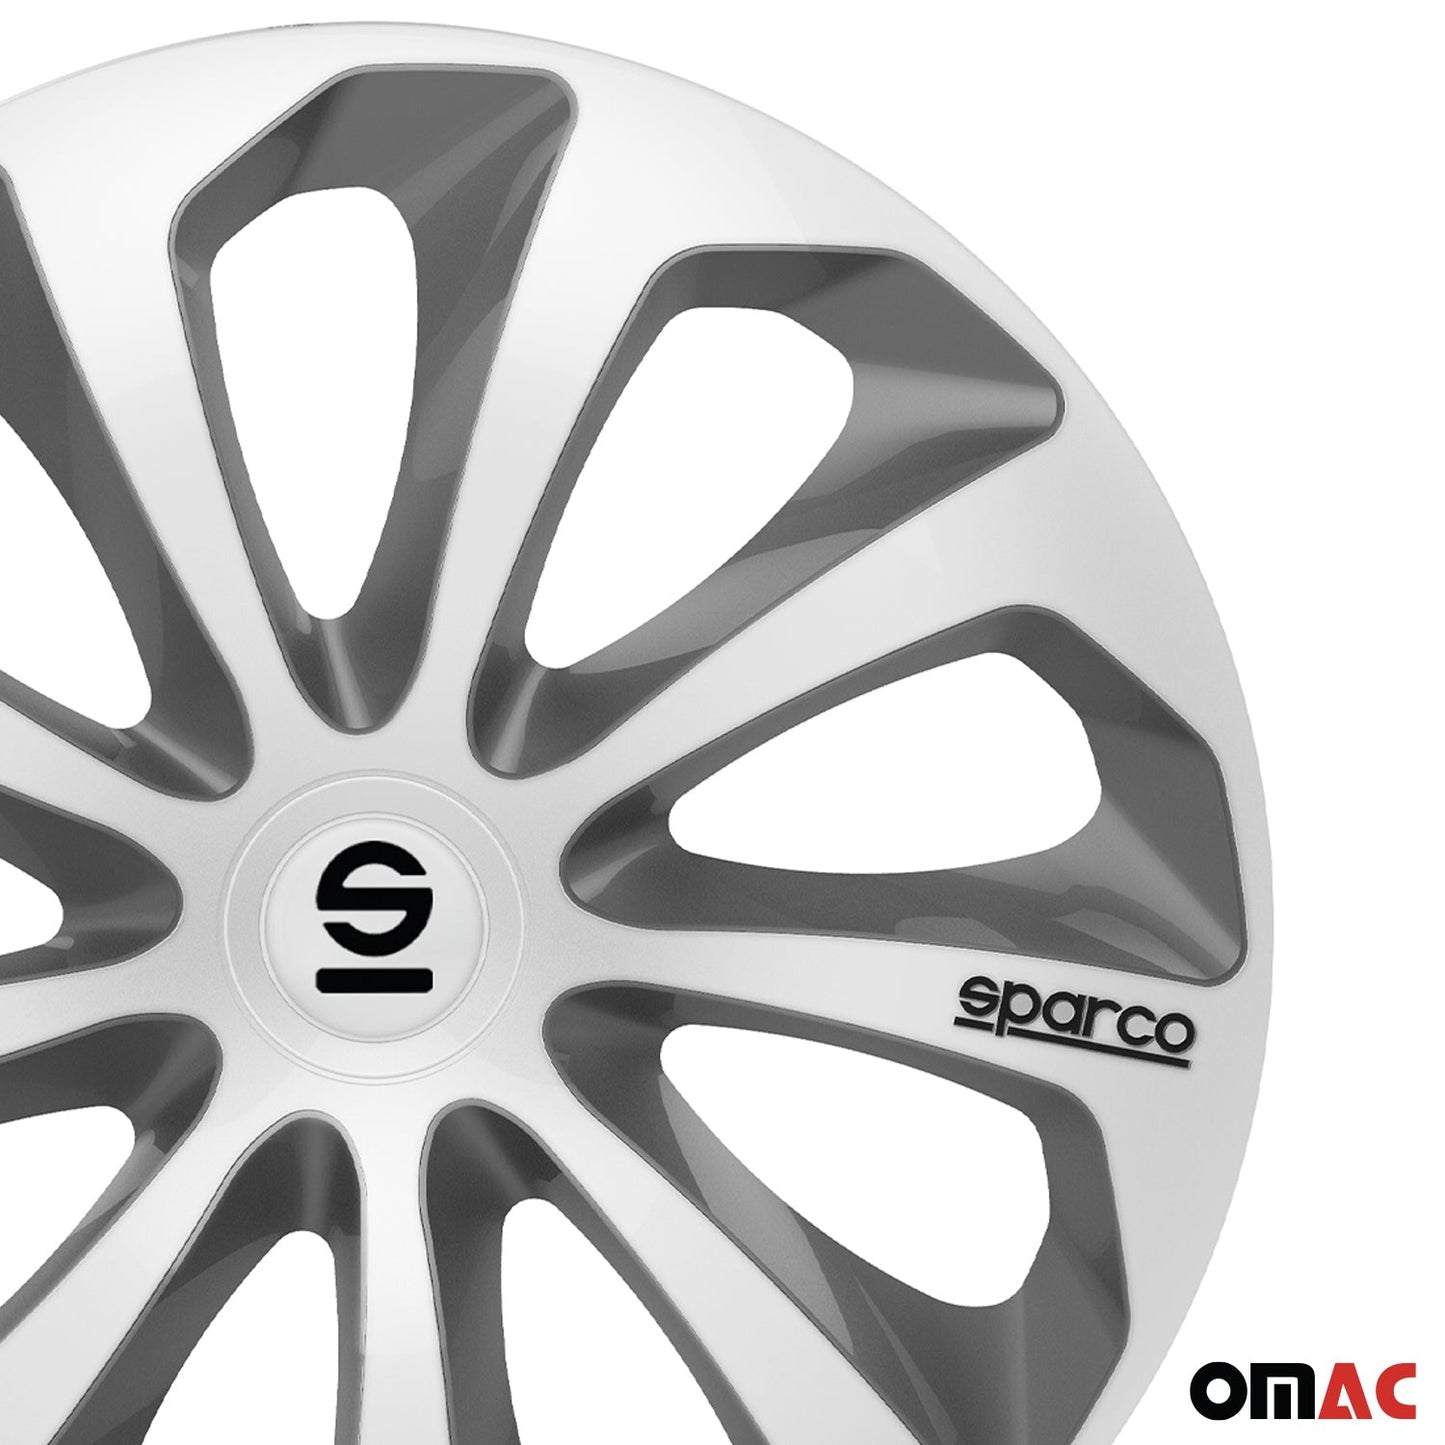 OMAC 16" Sparco Sicilia Wheel Covers Hubcaps Silver Gray 4 Pcs 96SPC1673SVGR